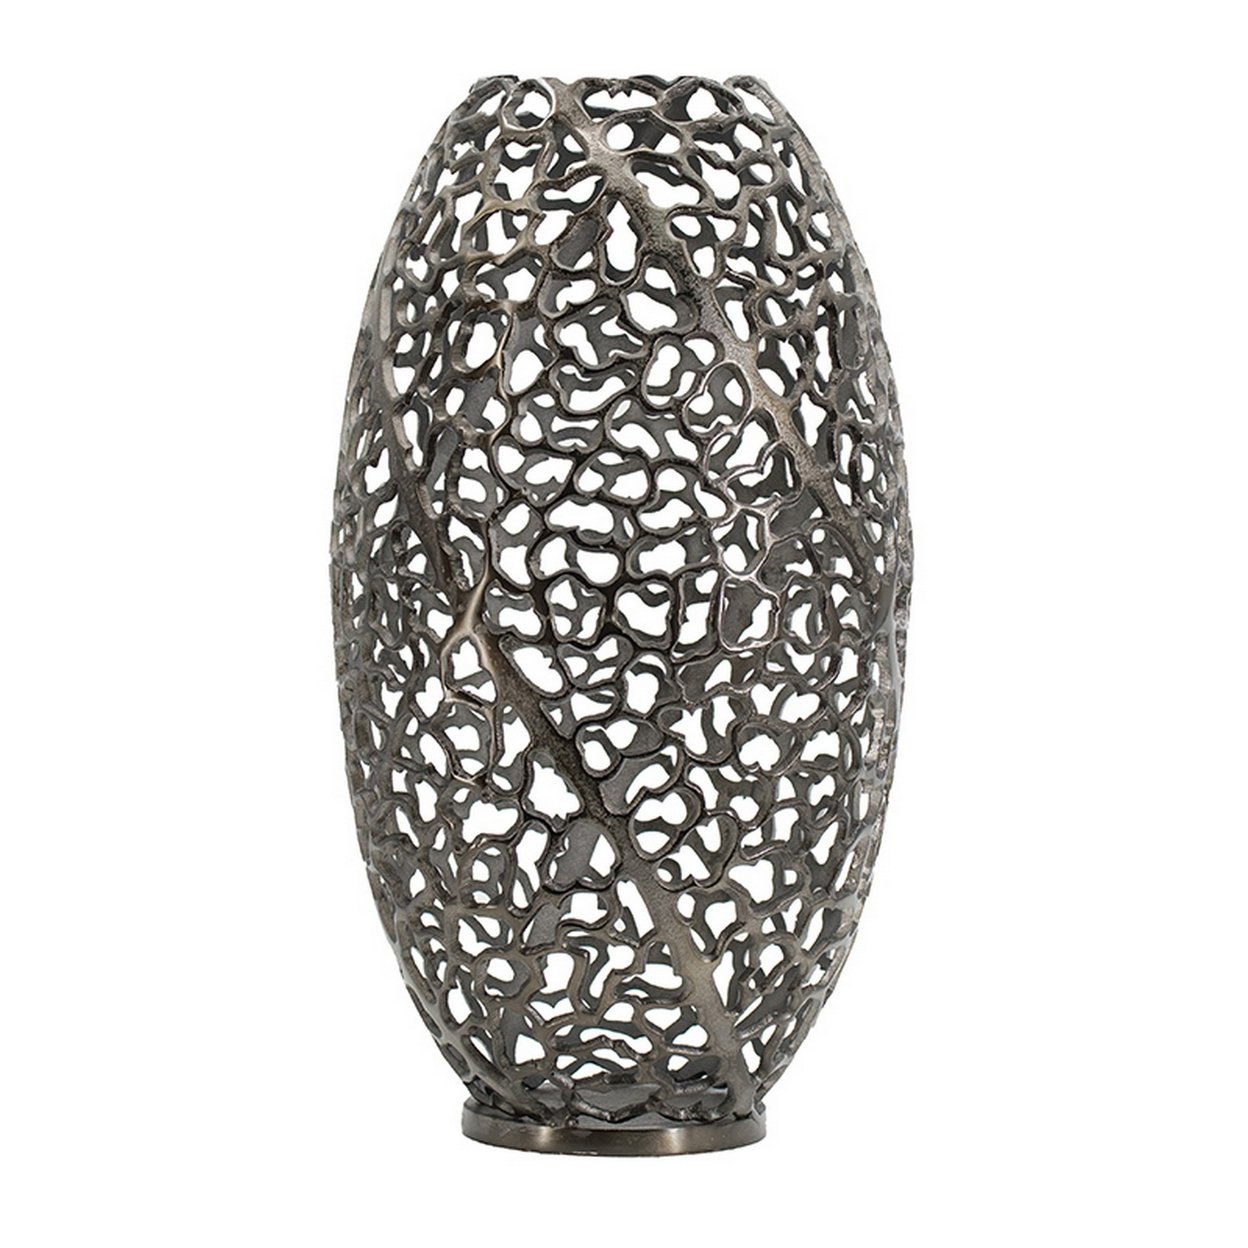 14 Inch Aluminum Accent Vase, Tall Curved Cut Out Design, Intricate Details- Saltoro Sherpi